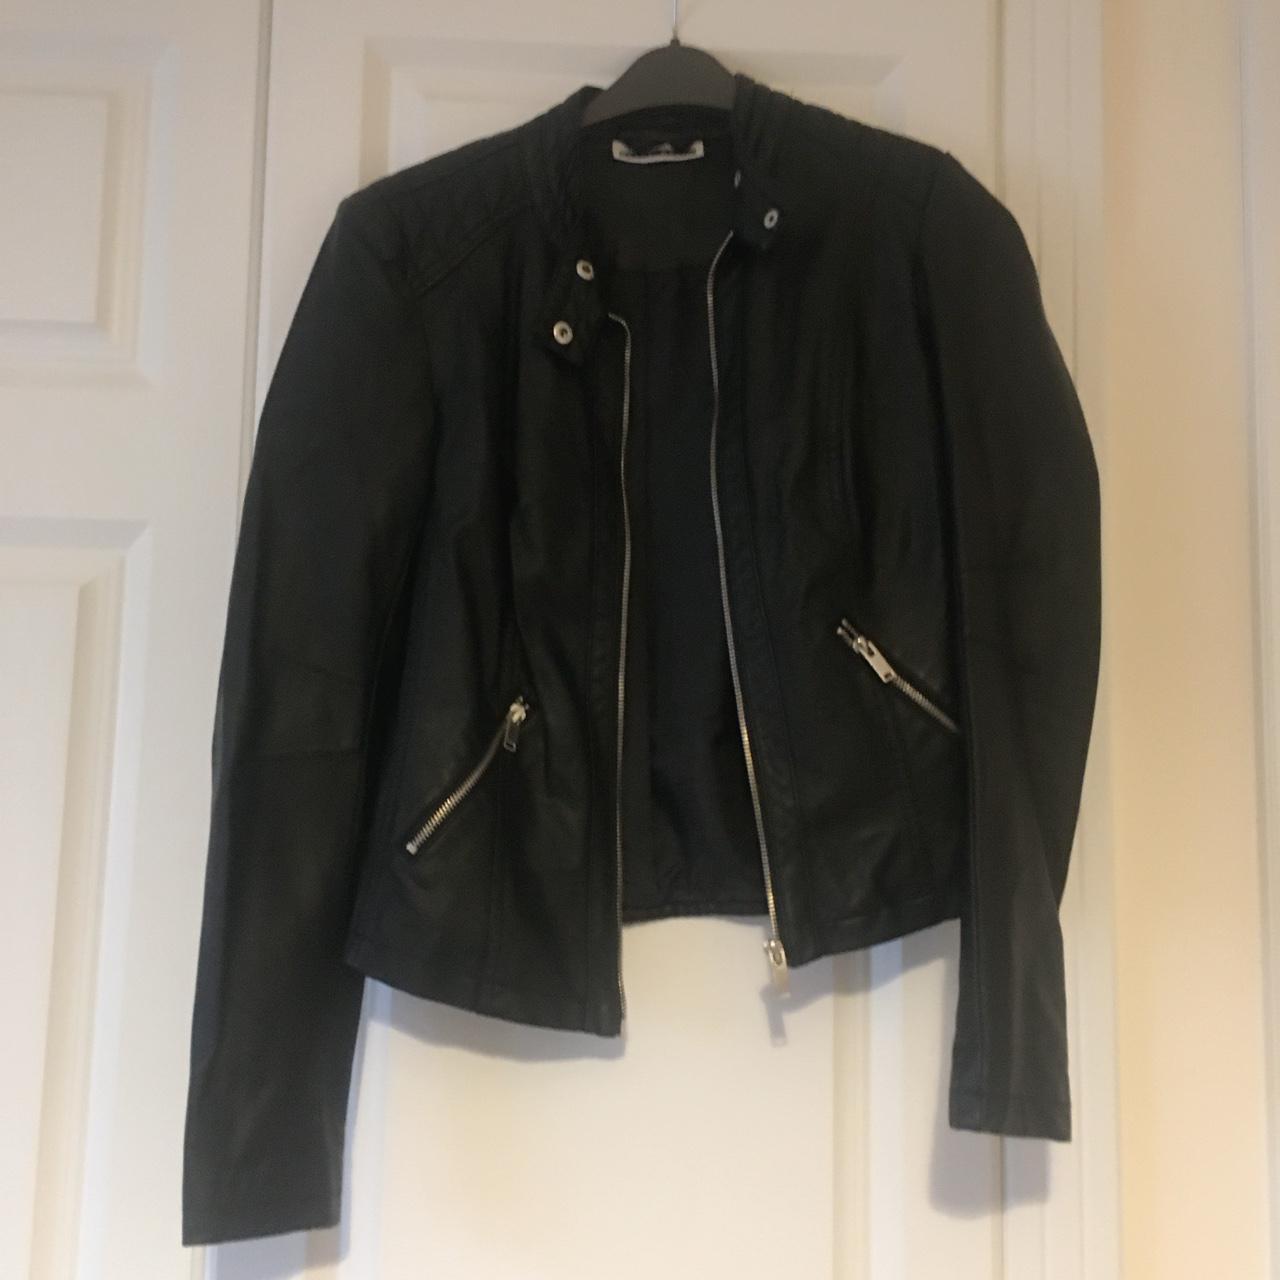 Noisy May faux leather jacket ALT for Clara Oswald... - Depop